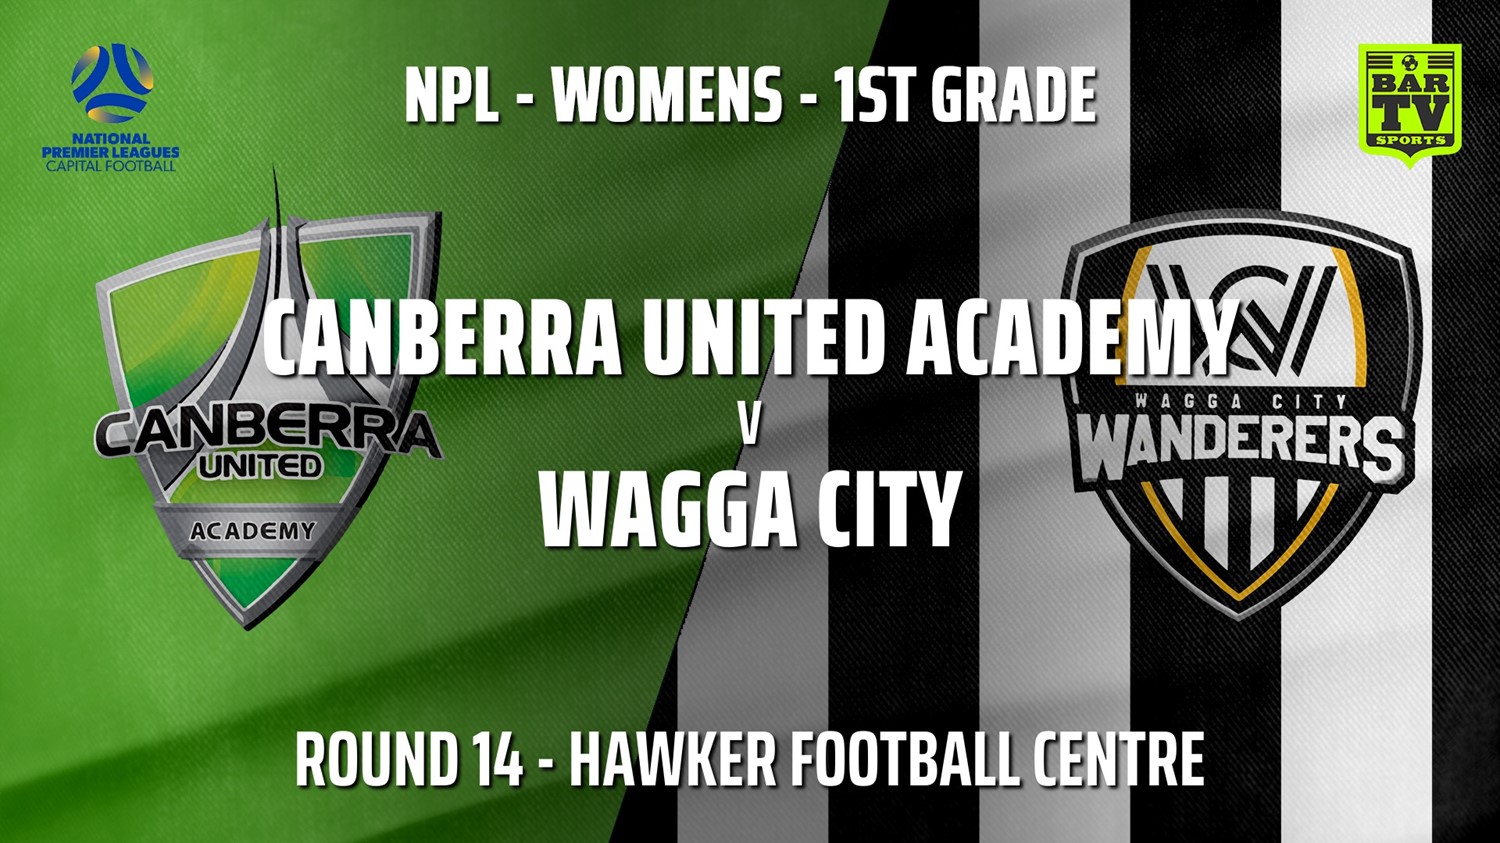 210718-Capital Womens Round 14 - Canberra United Academy v Wagga City Wanderers FC (women) Minigame Slate Image